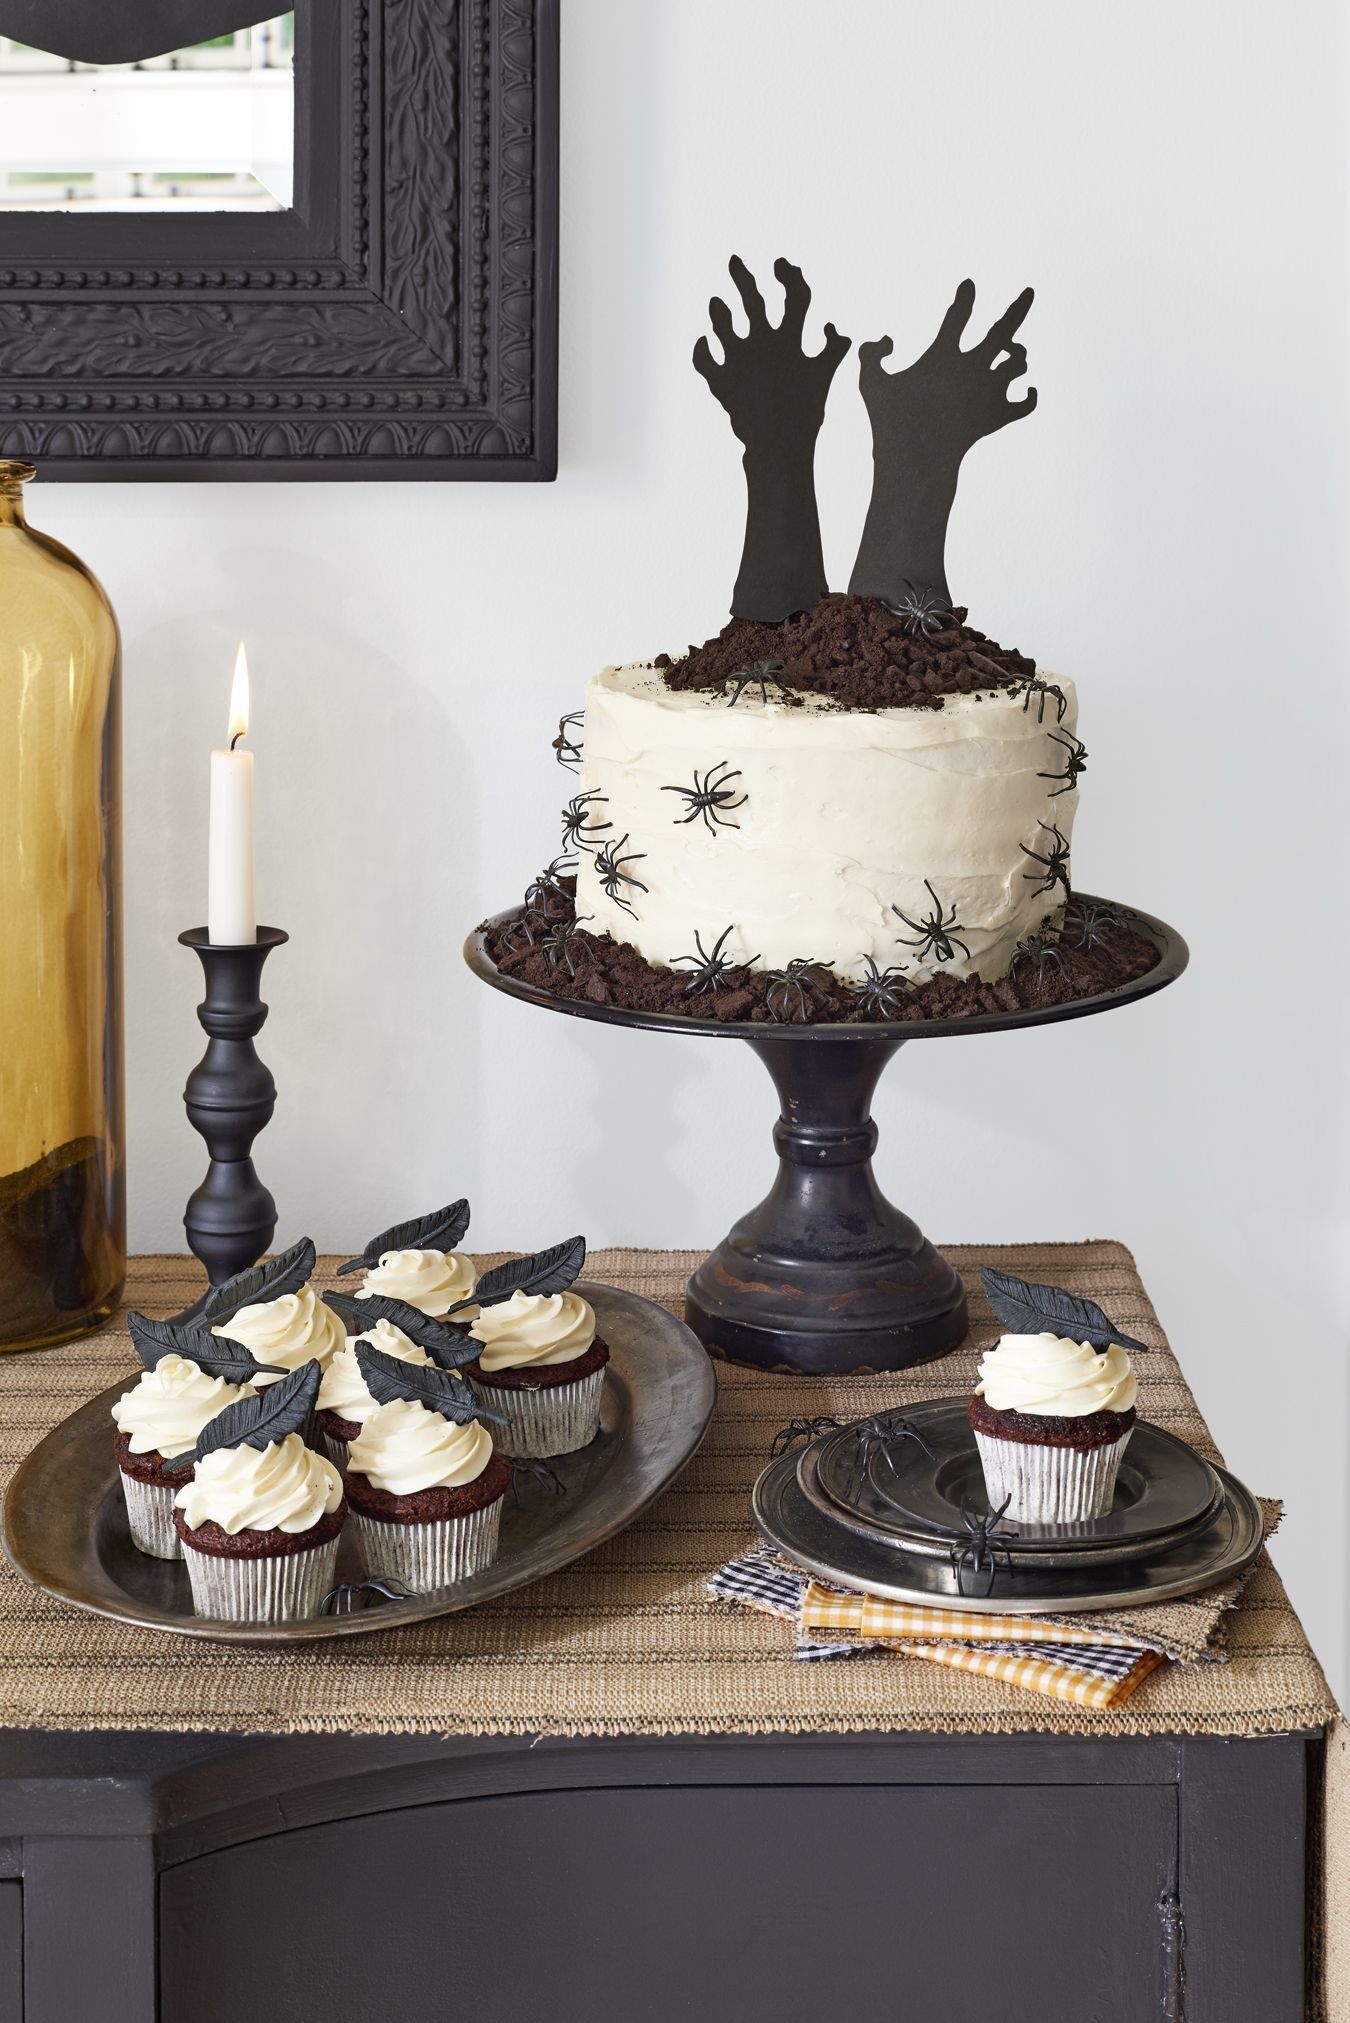 Scary Birthday Cakes, Halloween Cakes - OneCakeDown